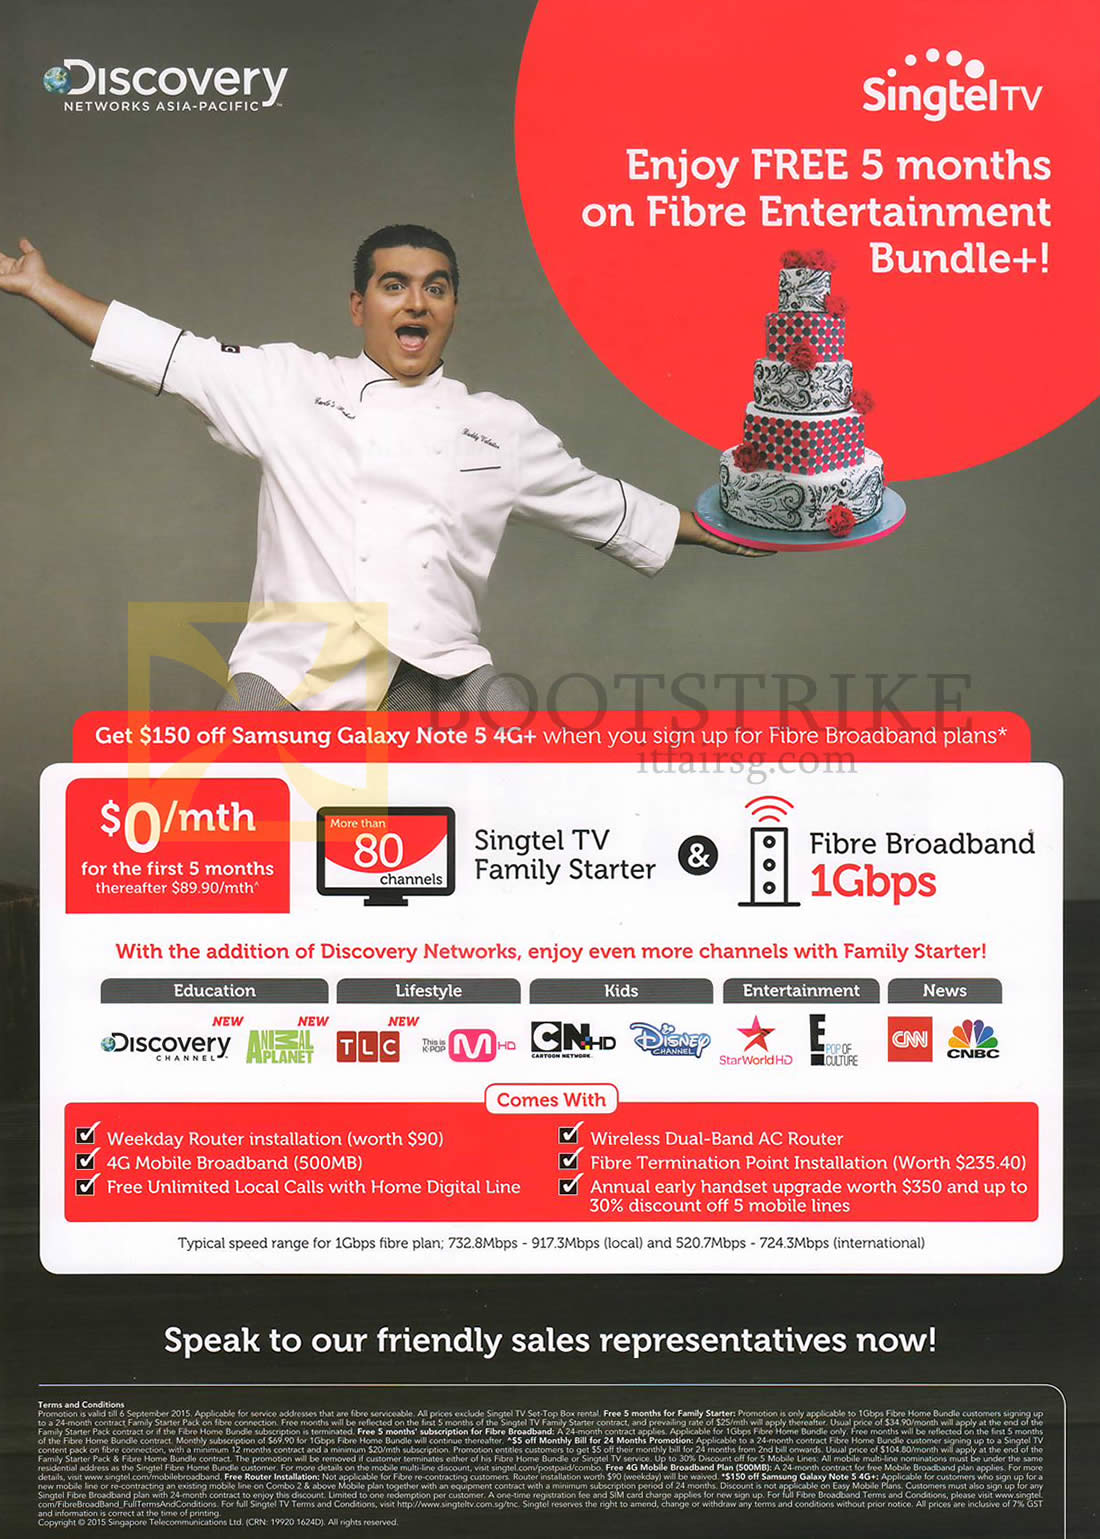 COMEX 2015 price list image brochure of Singtel TV Family Starter, Fibre Broadband 1Gbps Pack